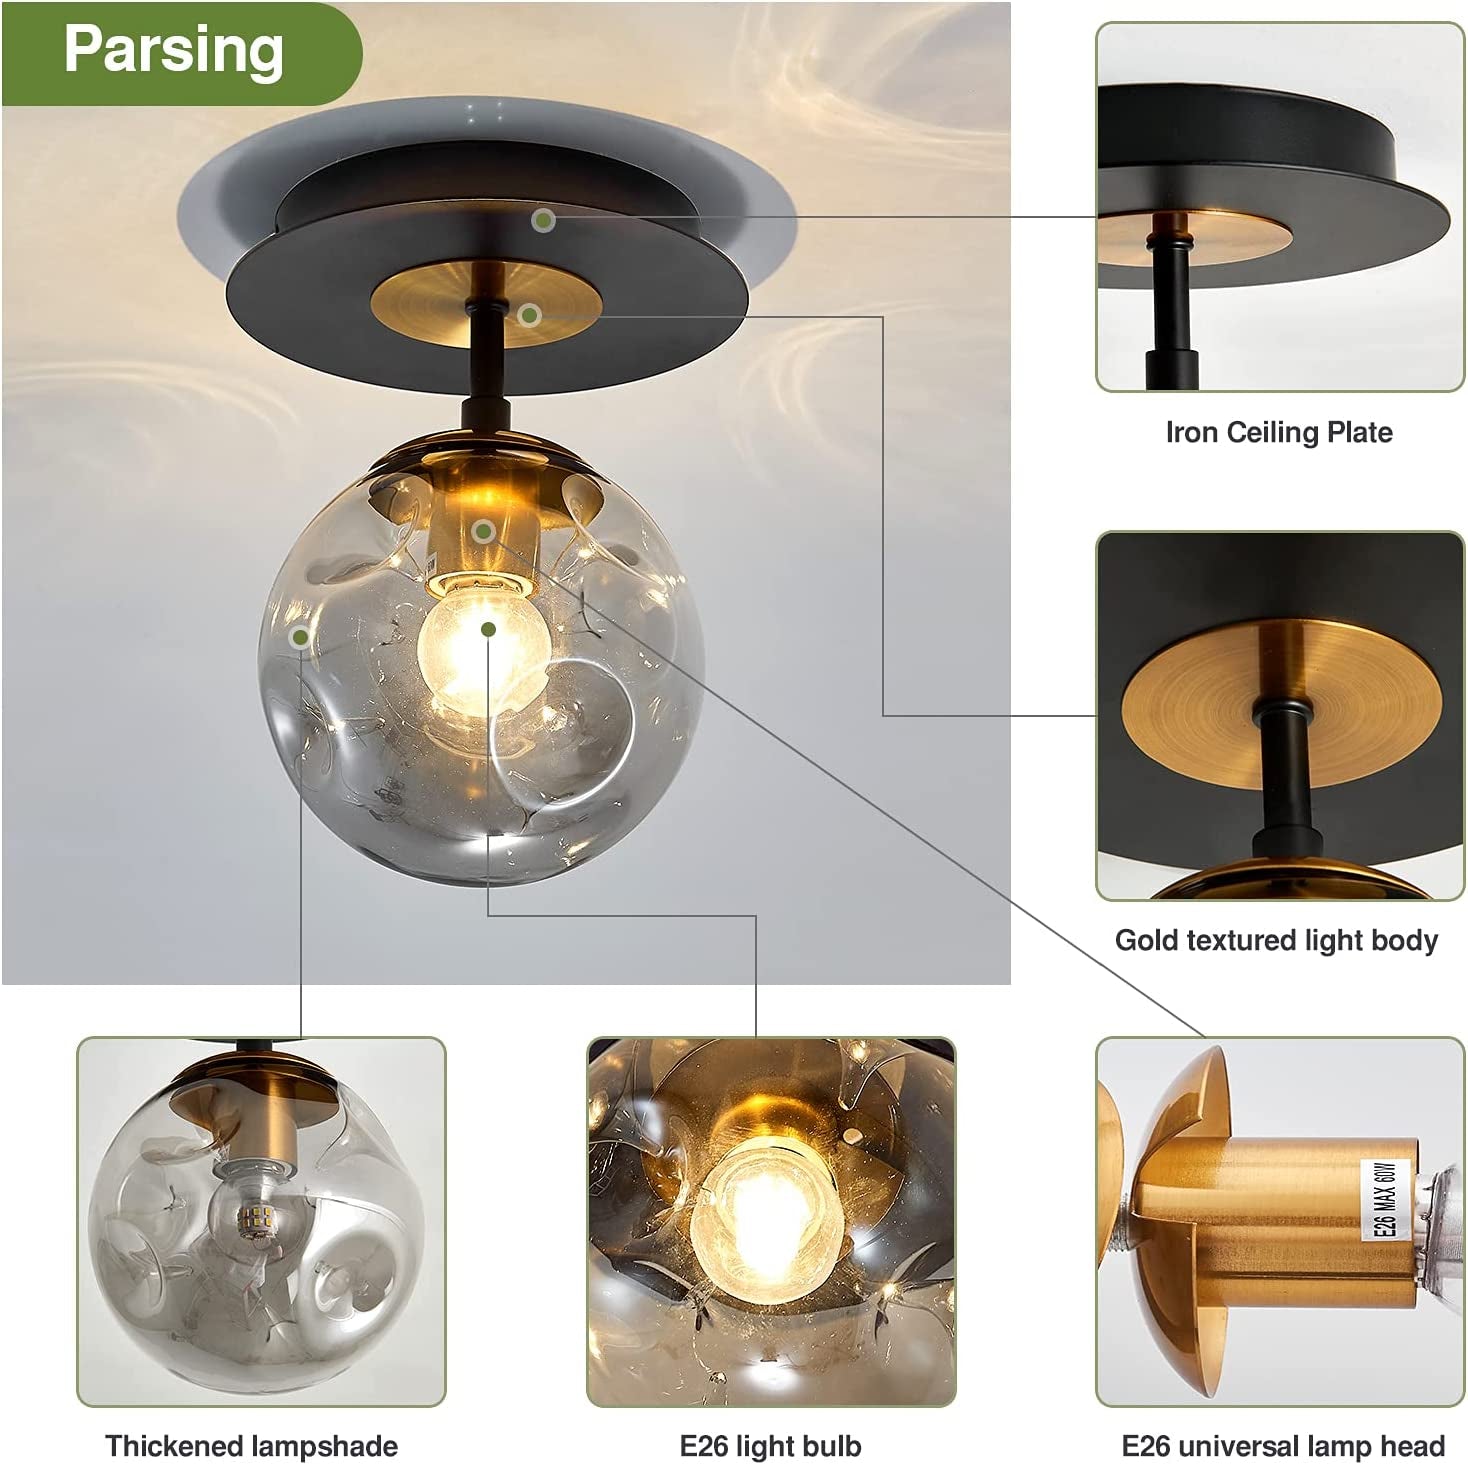 Sleek and stylish 1-Light Glass Globe Flush Mount for contemporary ceiling lighting.